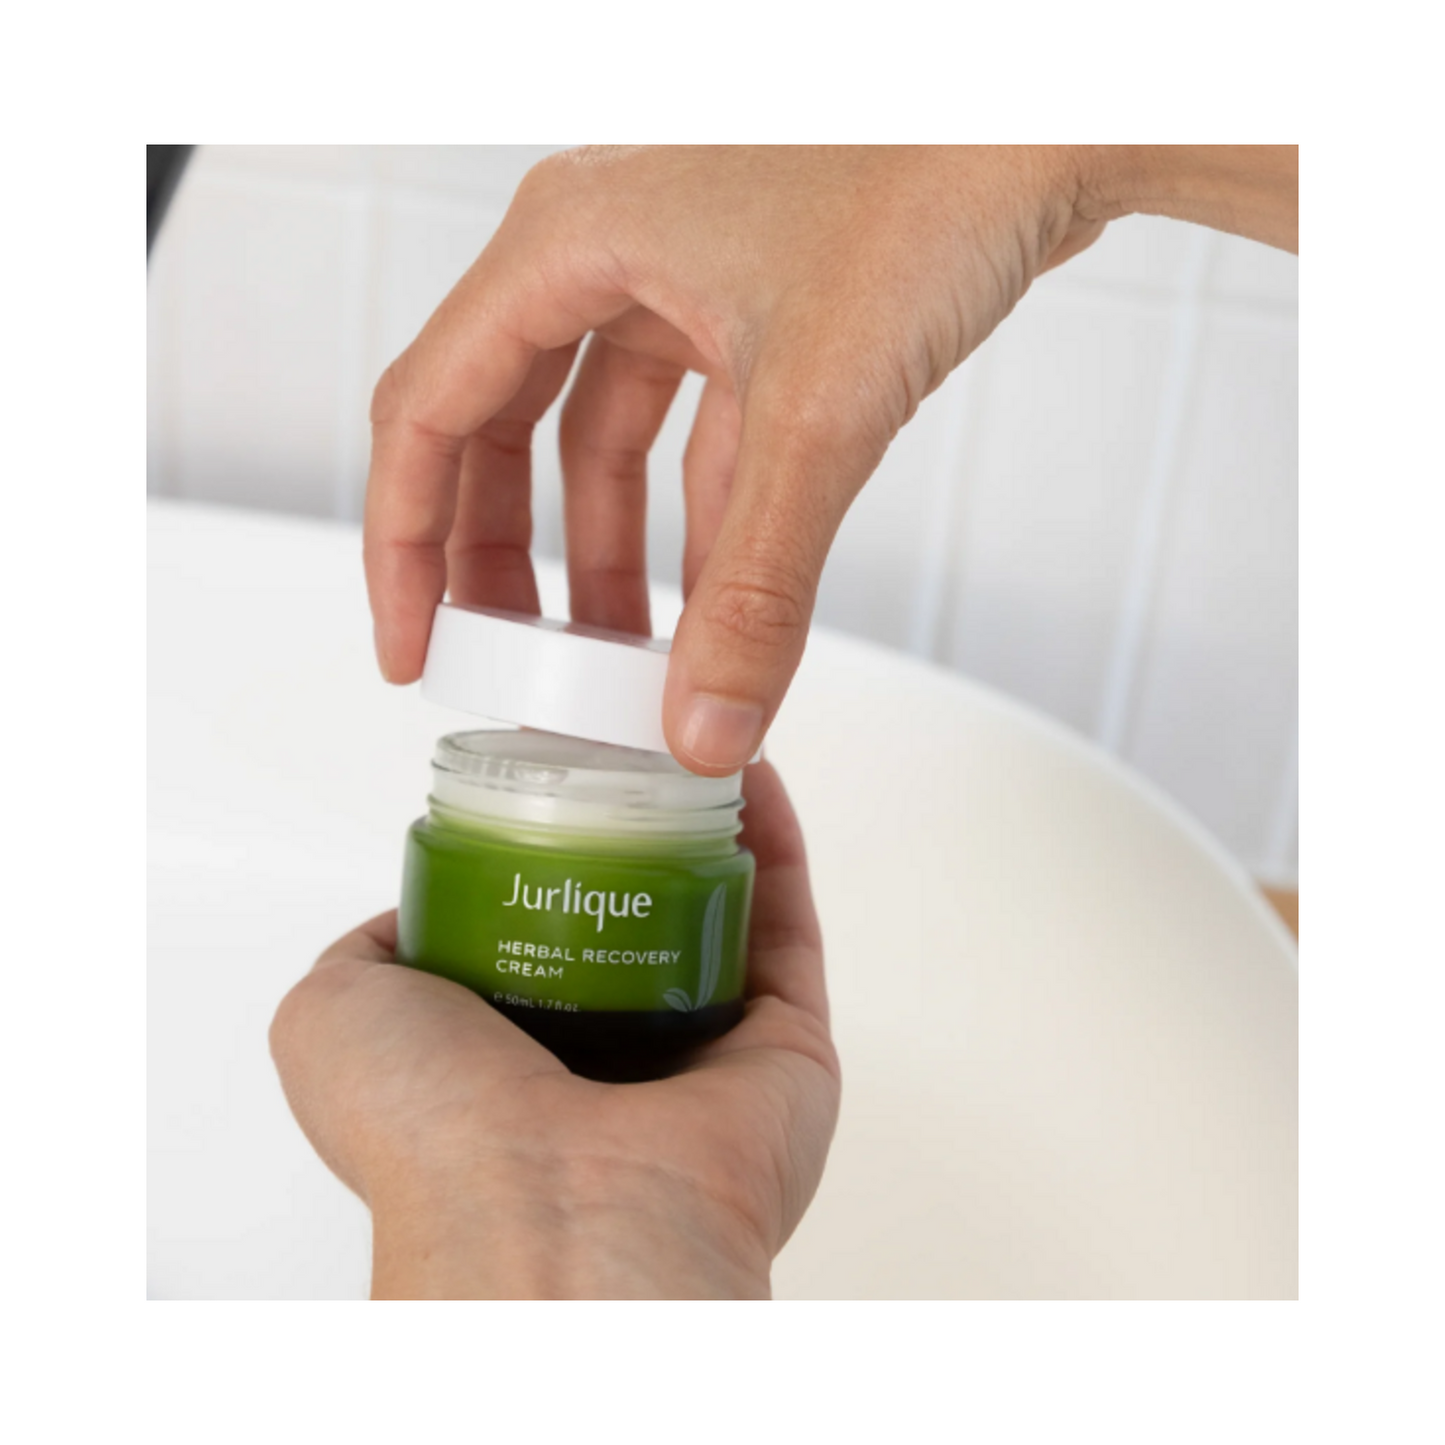 Jurlique Herbal Recovery Cream